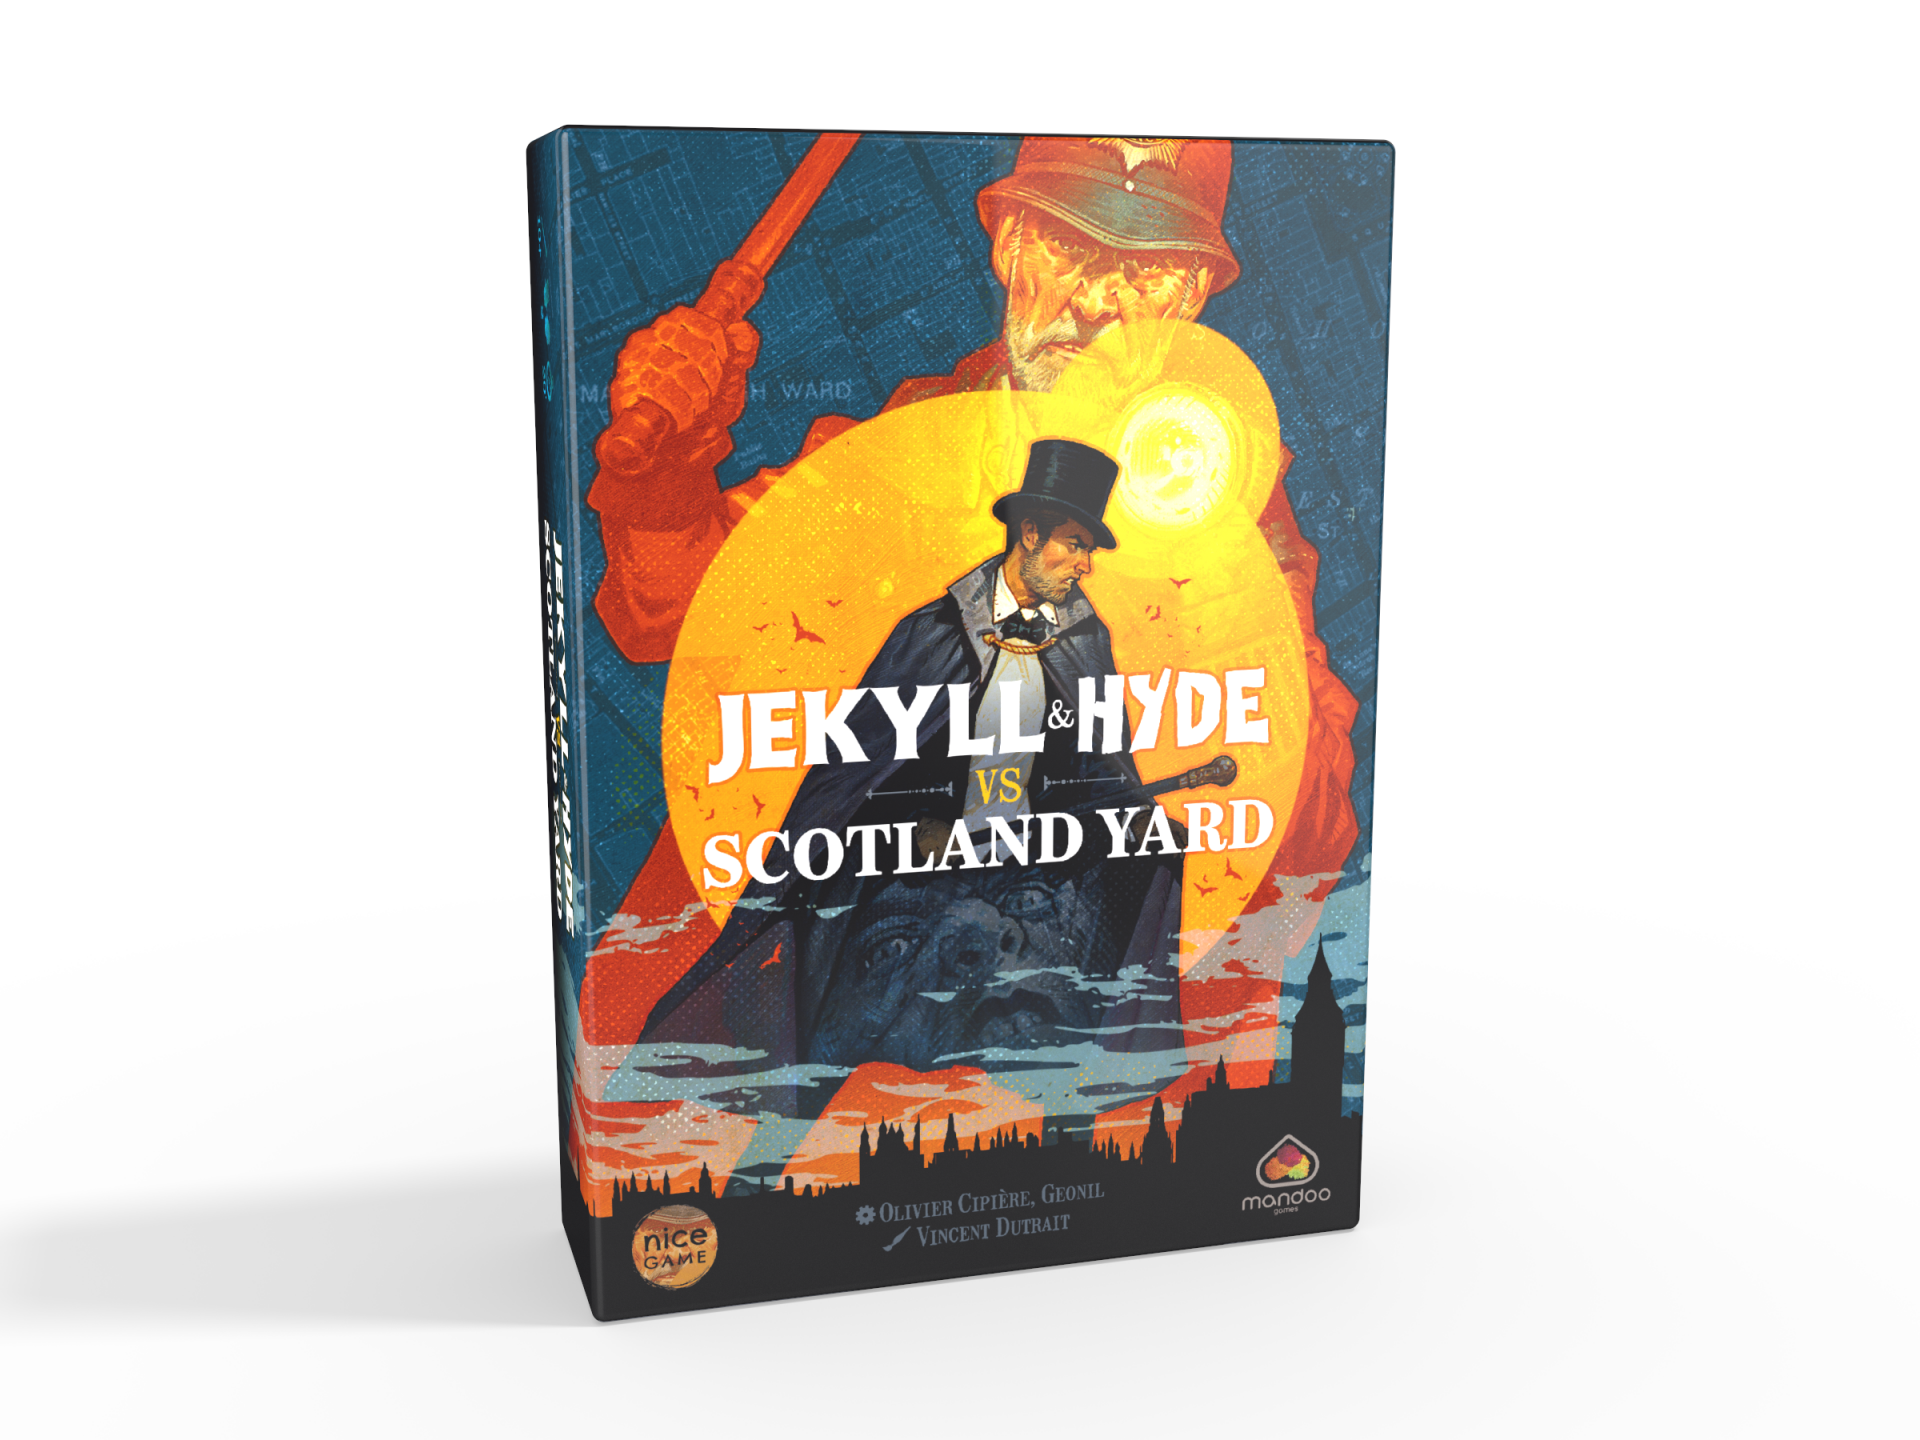 JEKYLL & HYDE VS SCOTLAND YARD